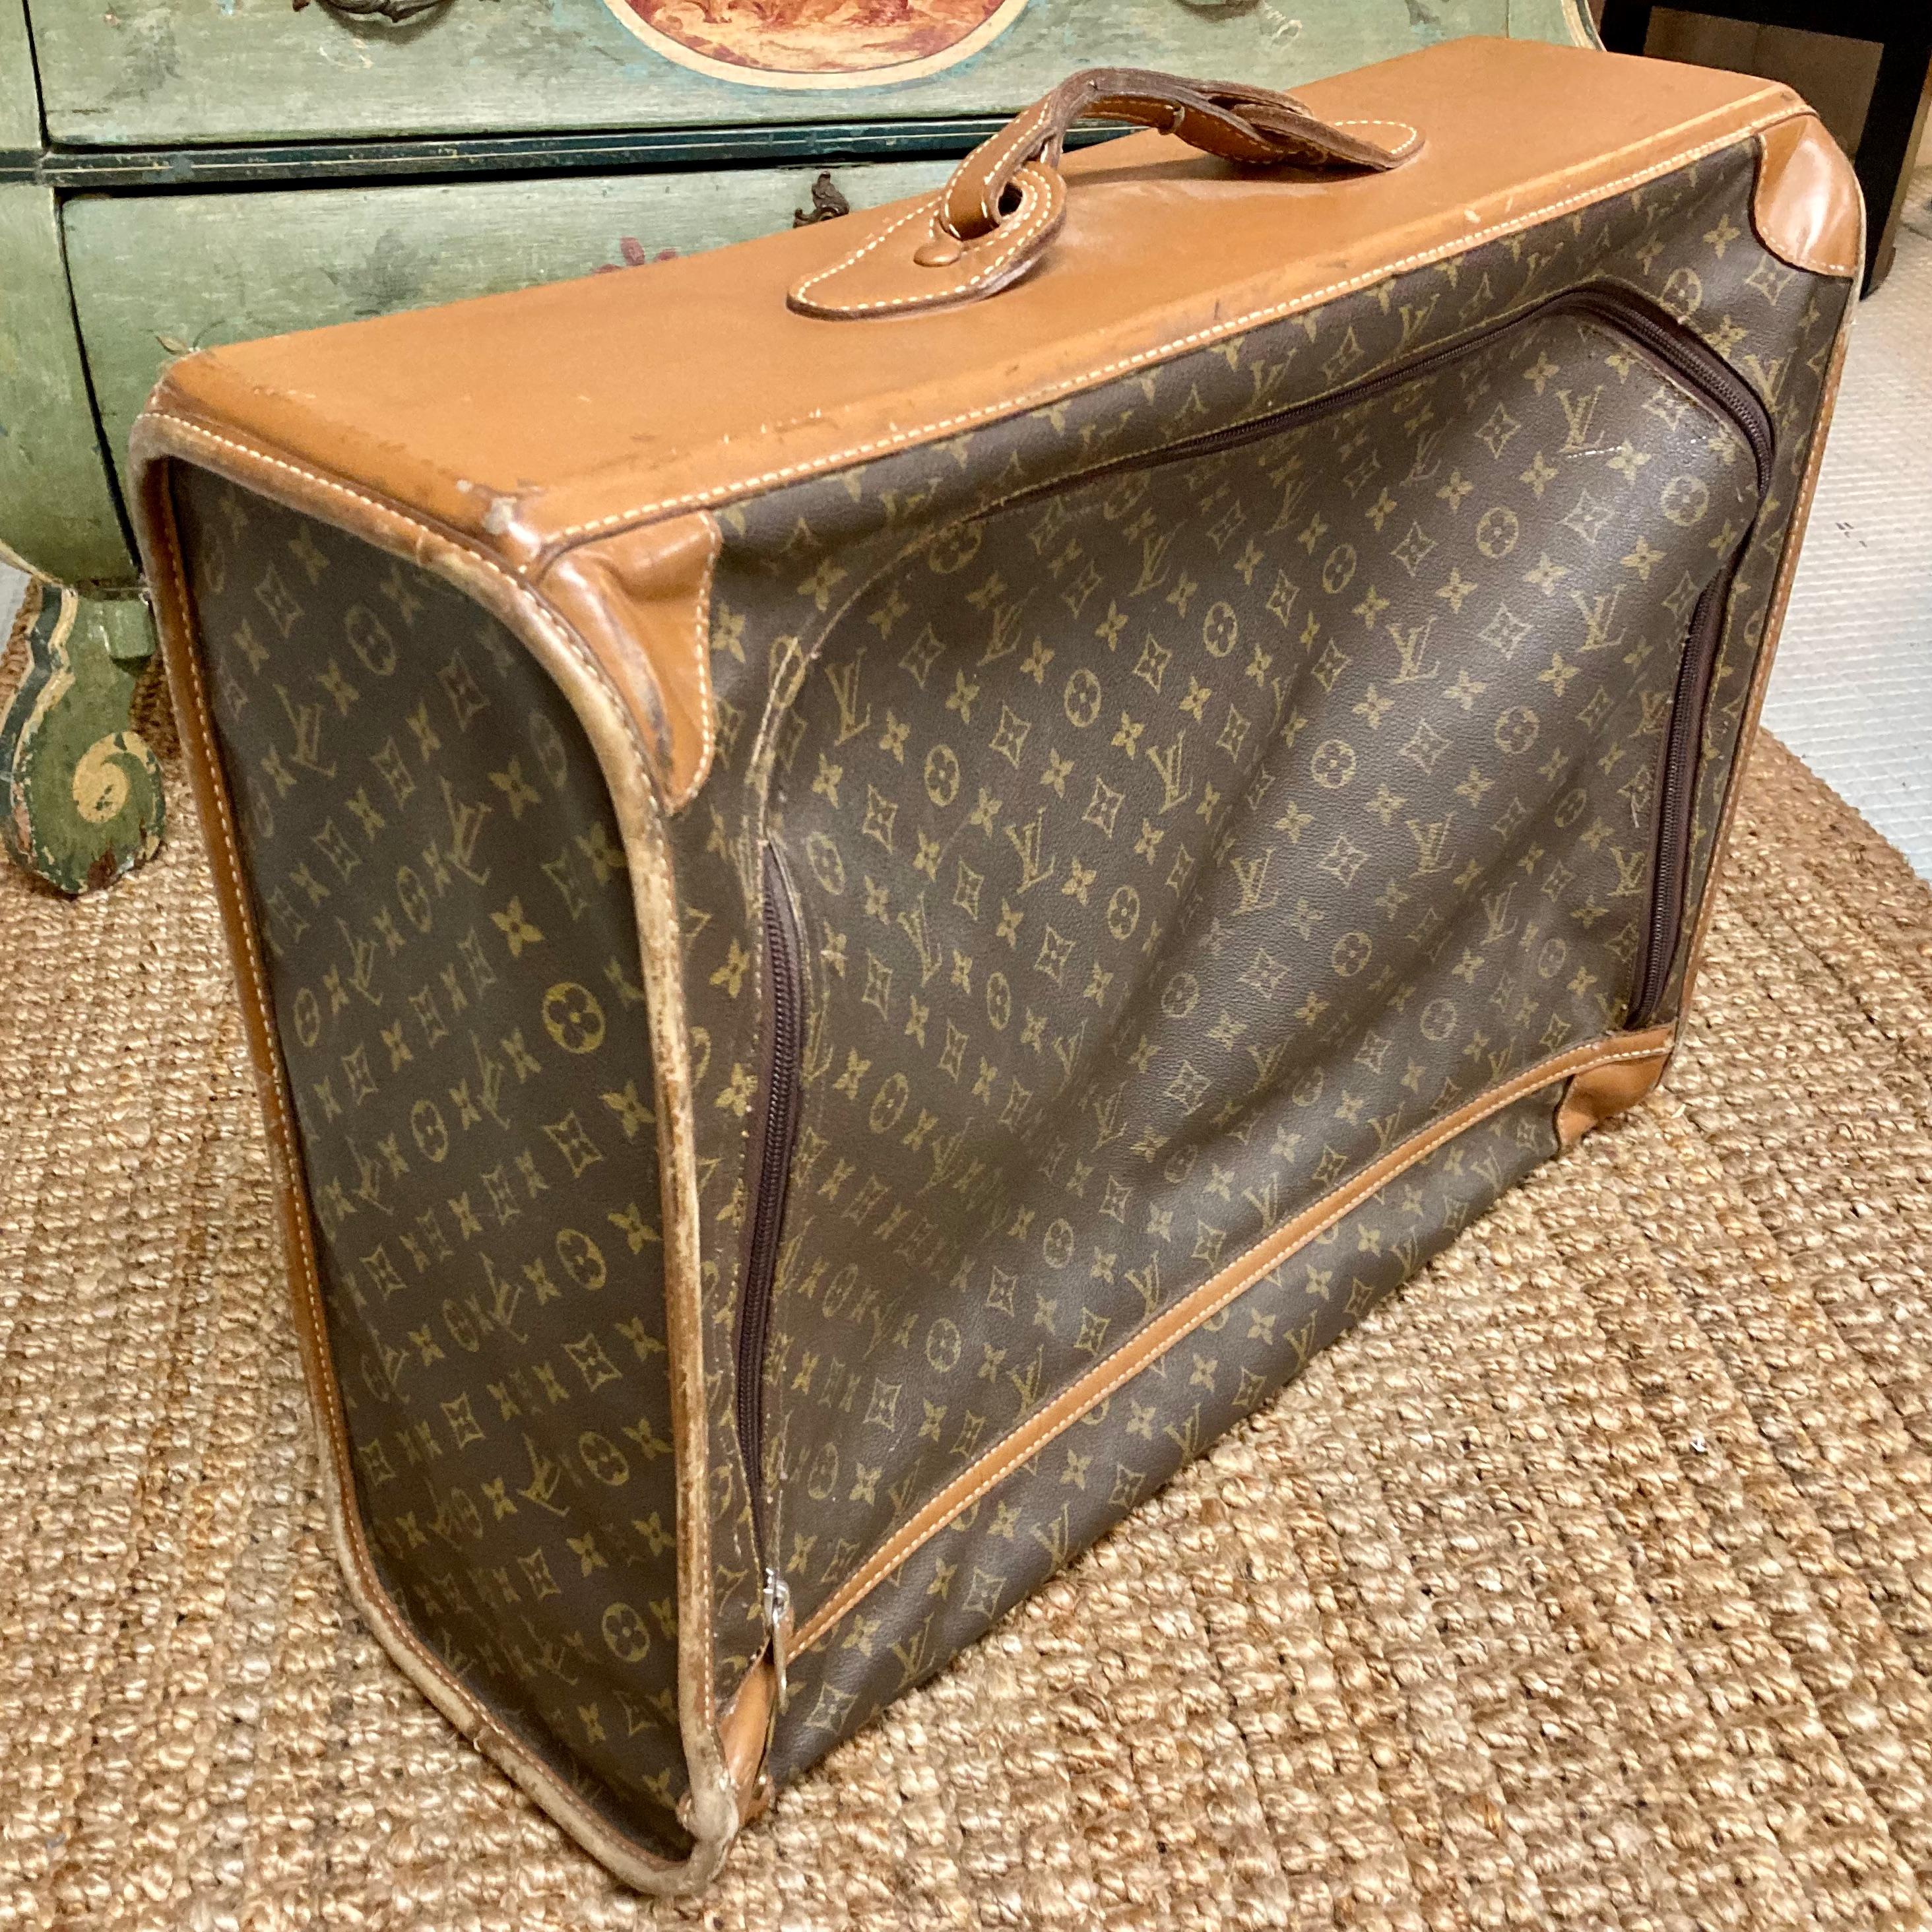 Beautiful vintage Louis Vuitton trunk. Fun item to use or display.